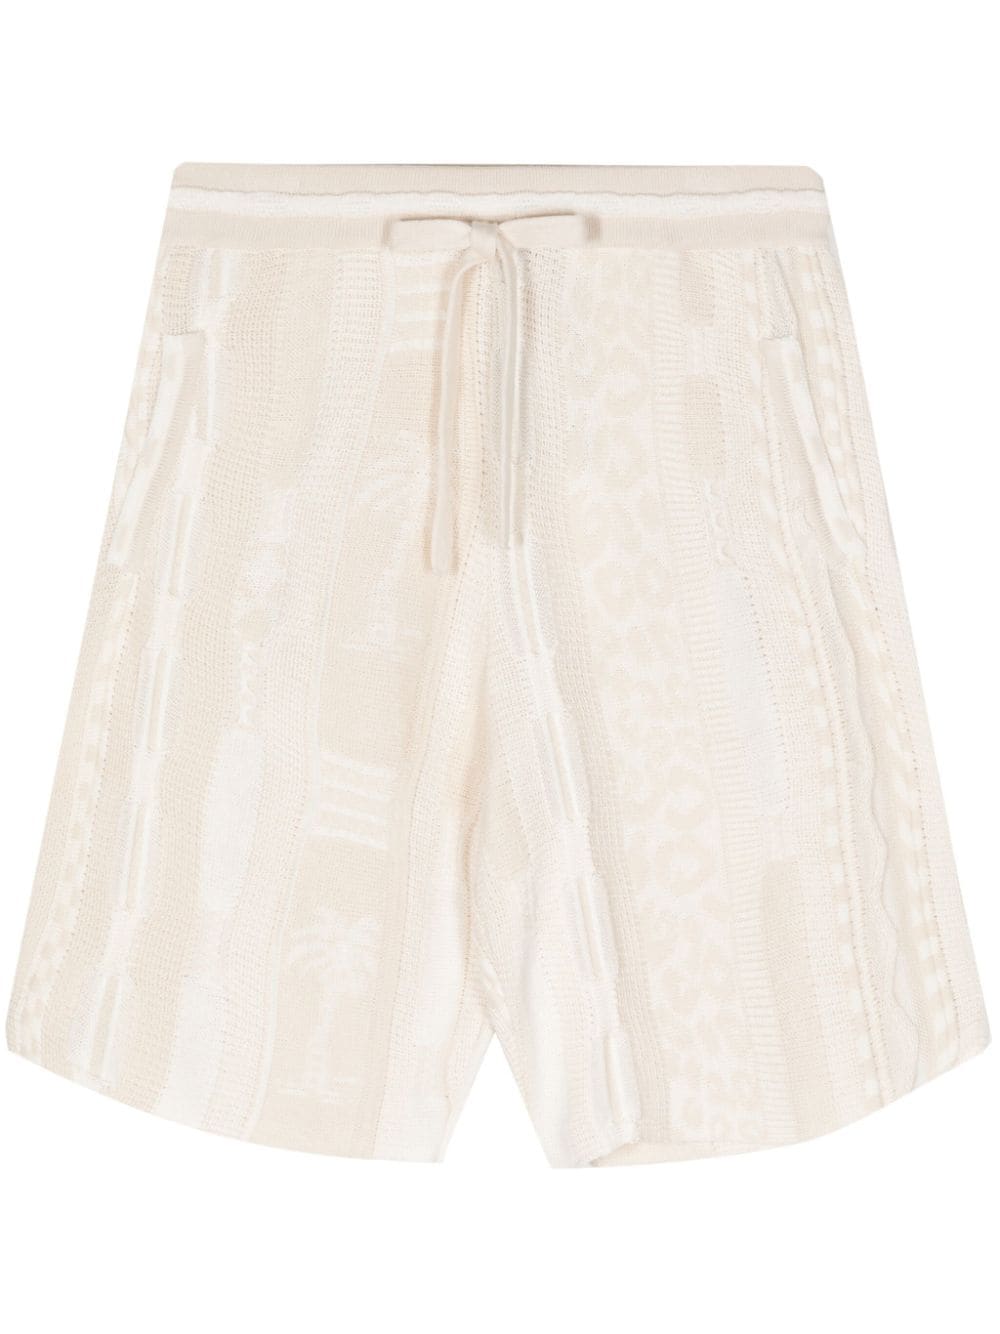 textured-finish cotton shorts